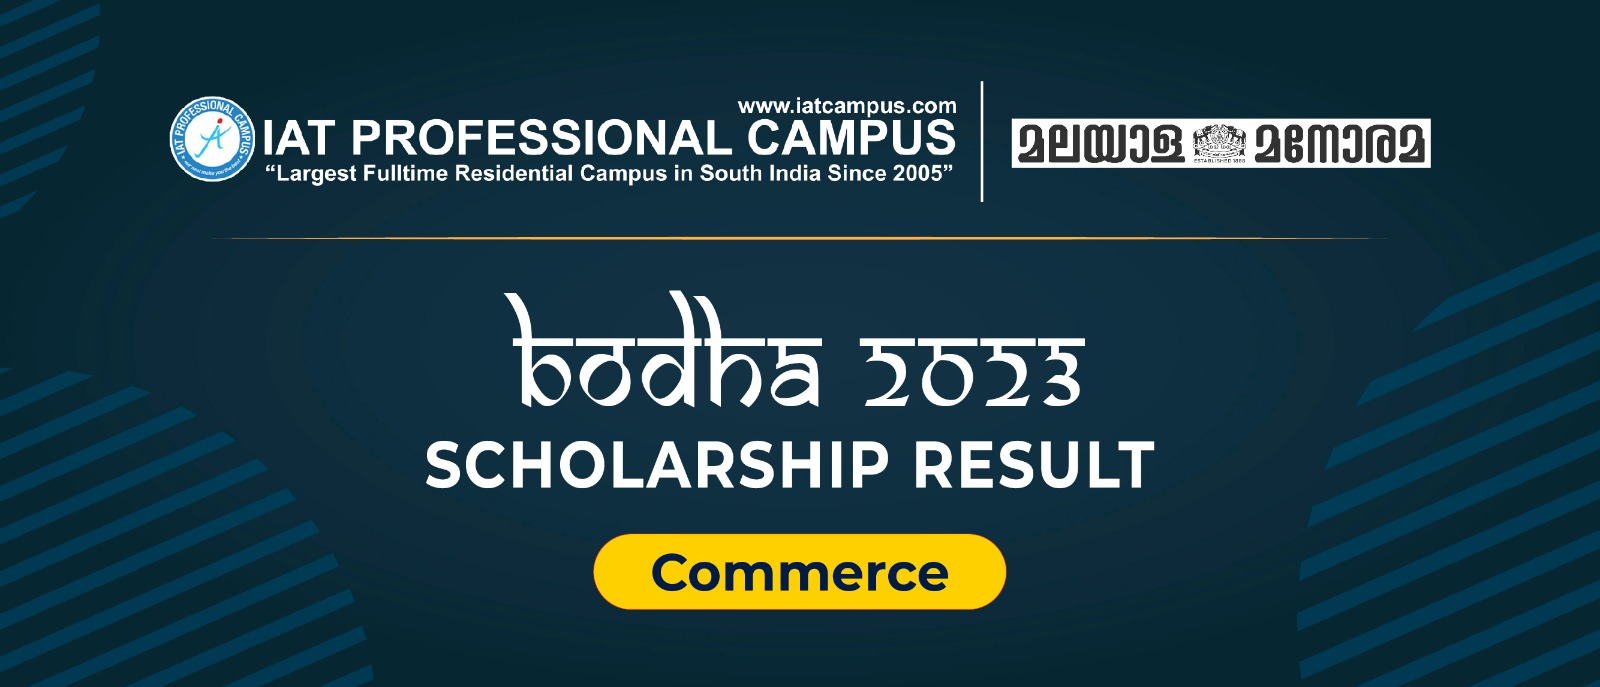 Bodha 2023 Scholarship results Commerce Banner